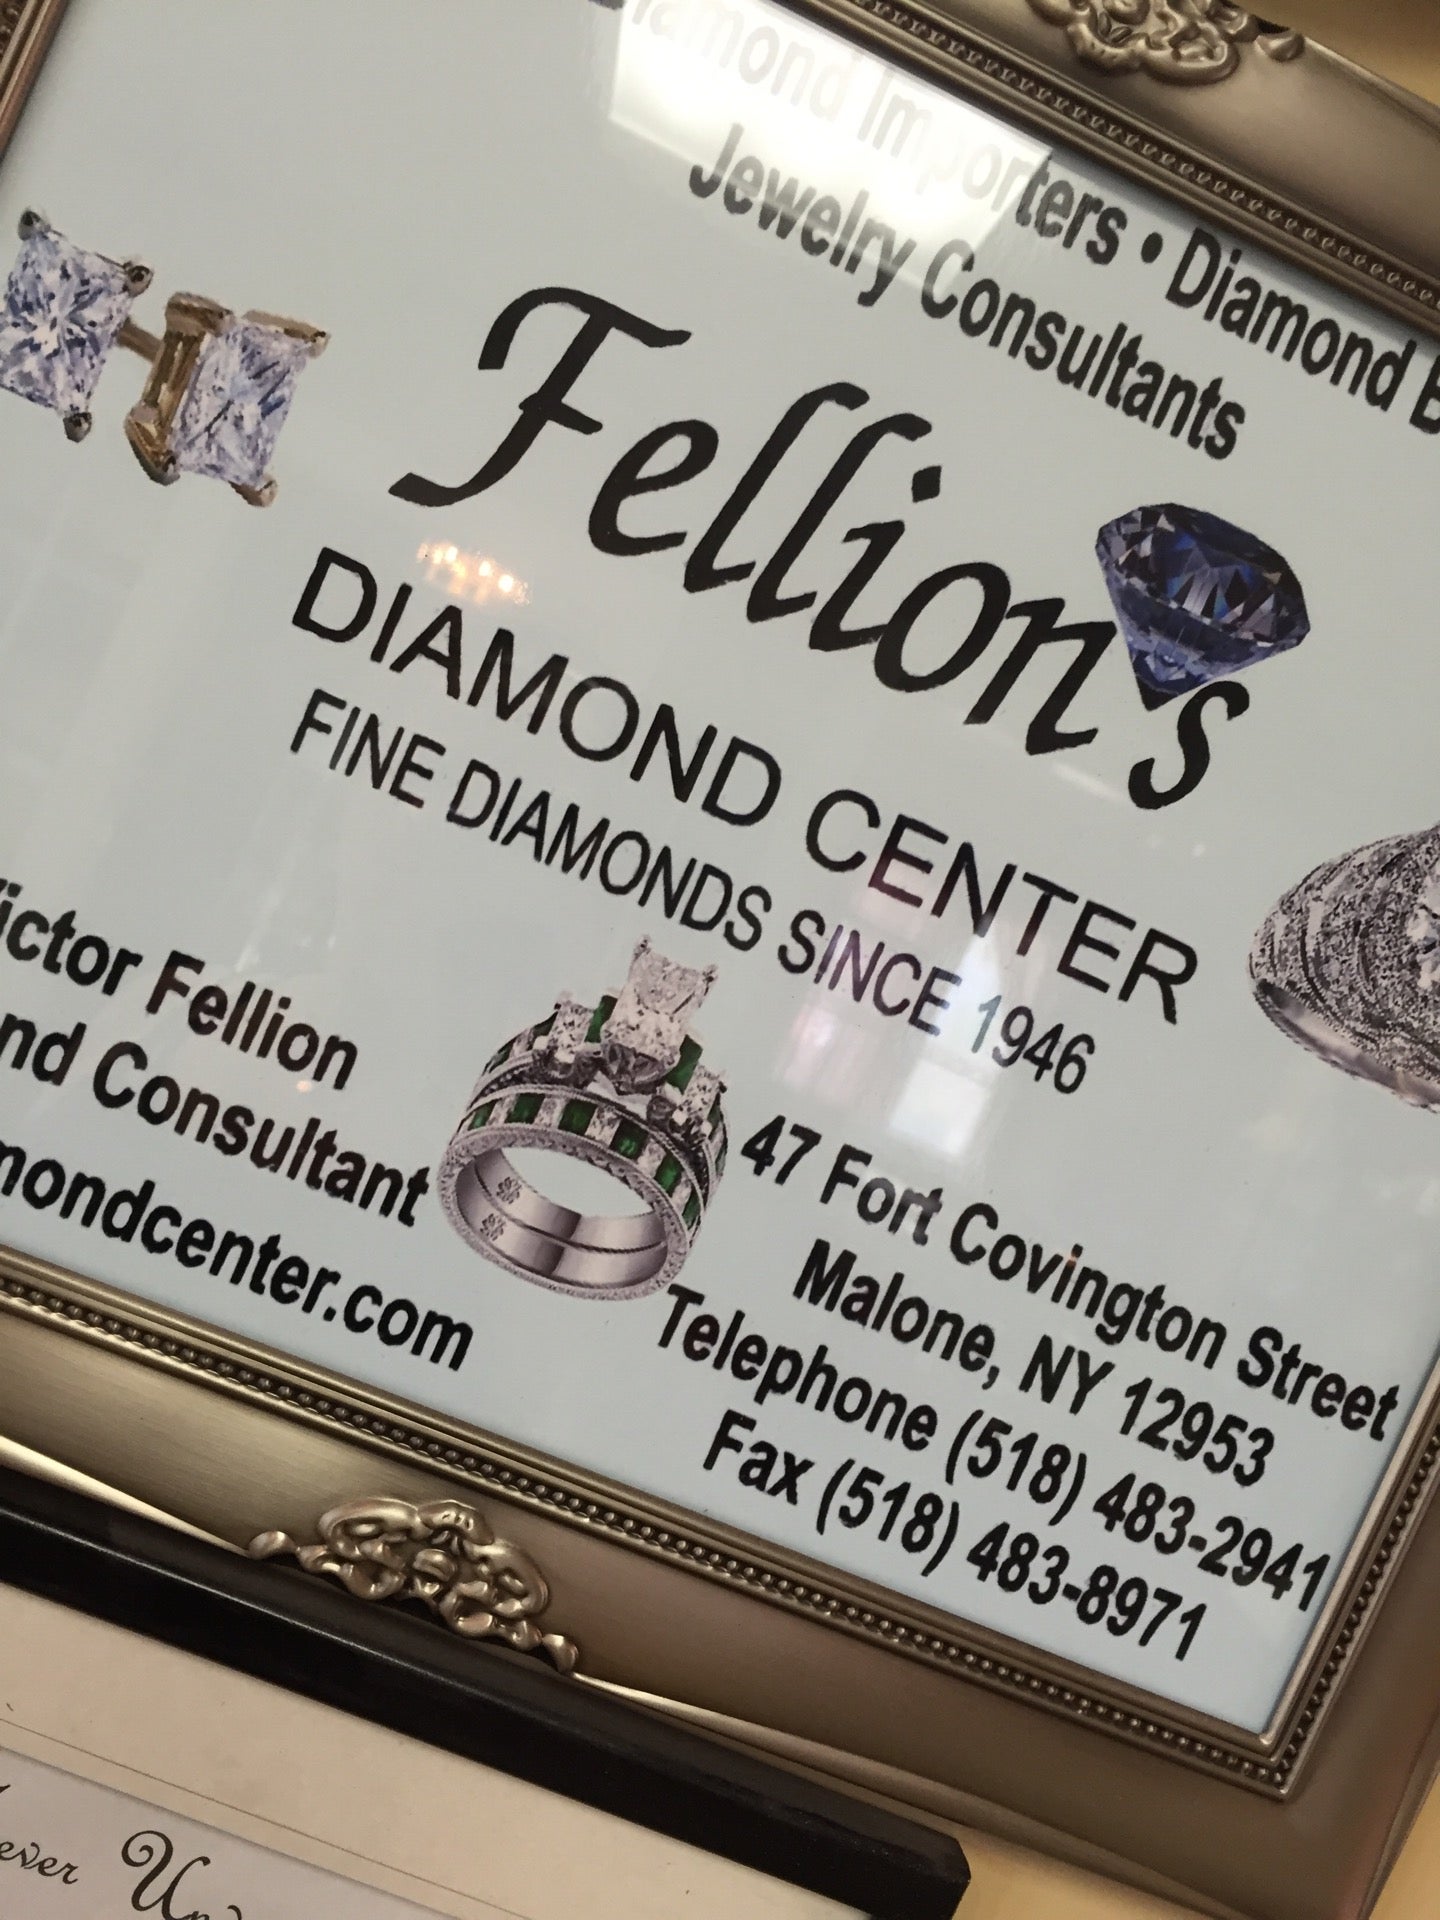 Fellion's Diamond Center 47 Fort Covington St, Malone New York 12953